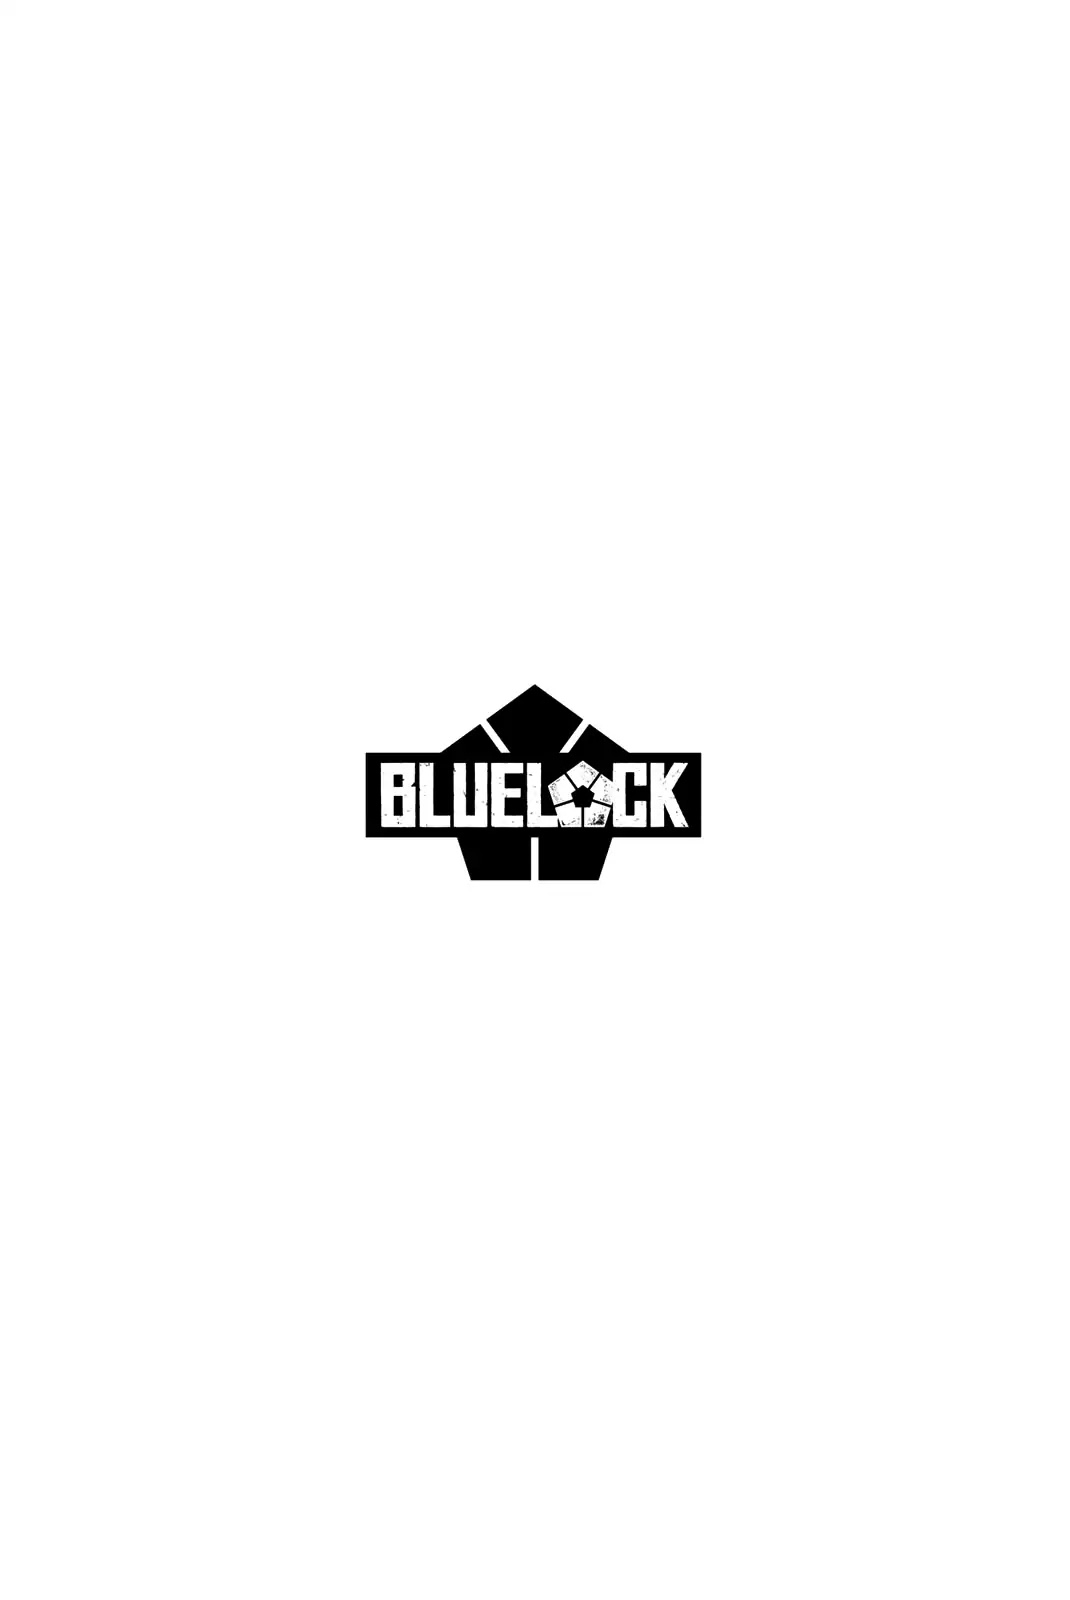 Blue Lock chapter 1